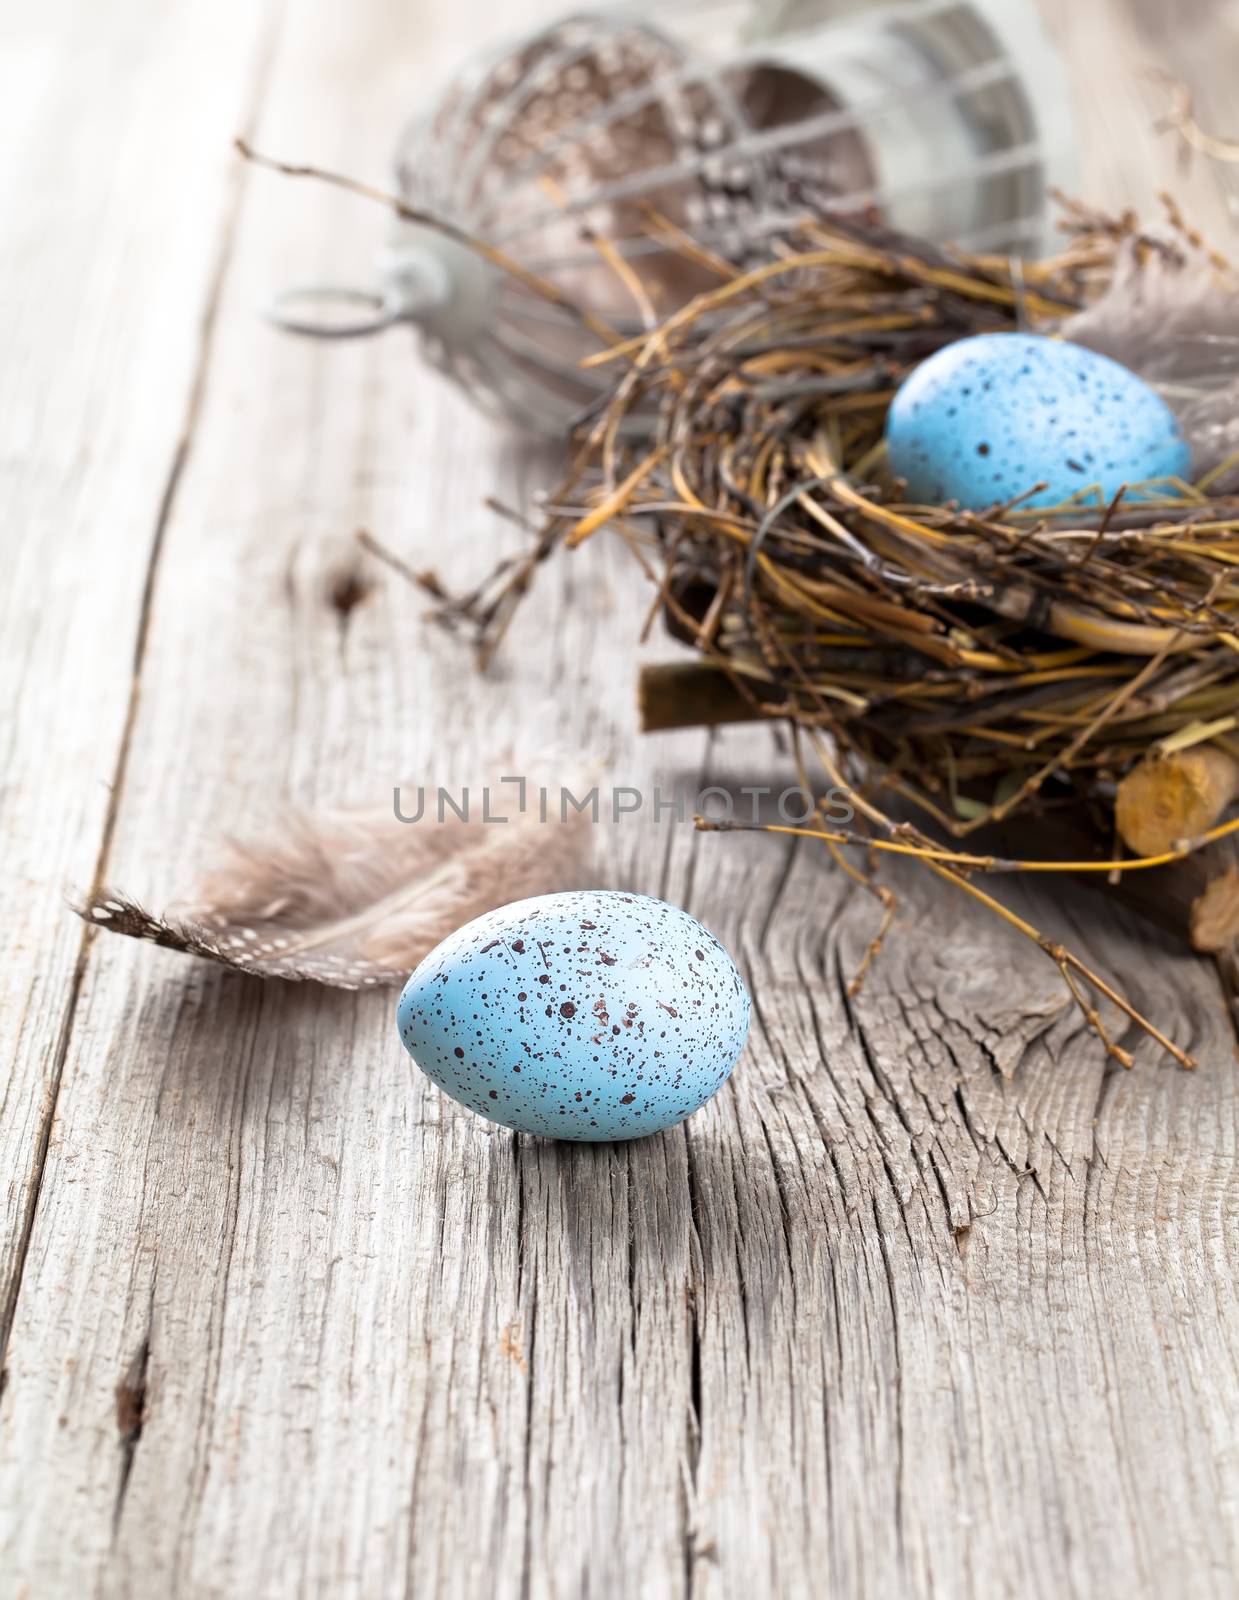 eggs in nest on wooden background by motorolka